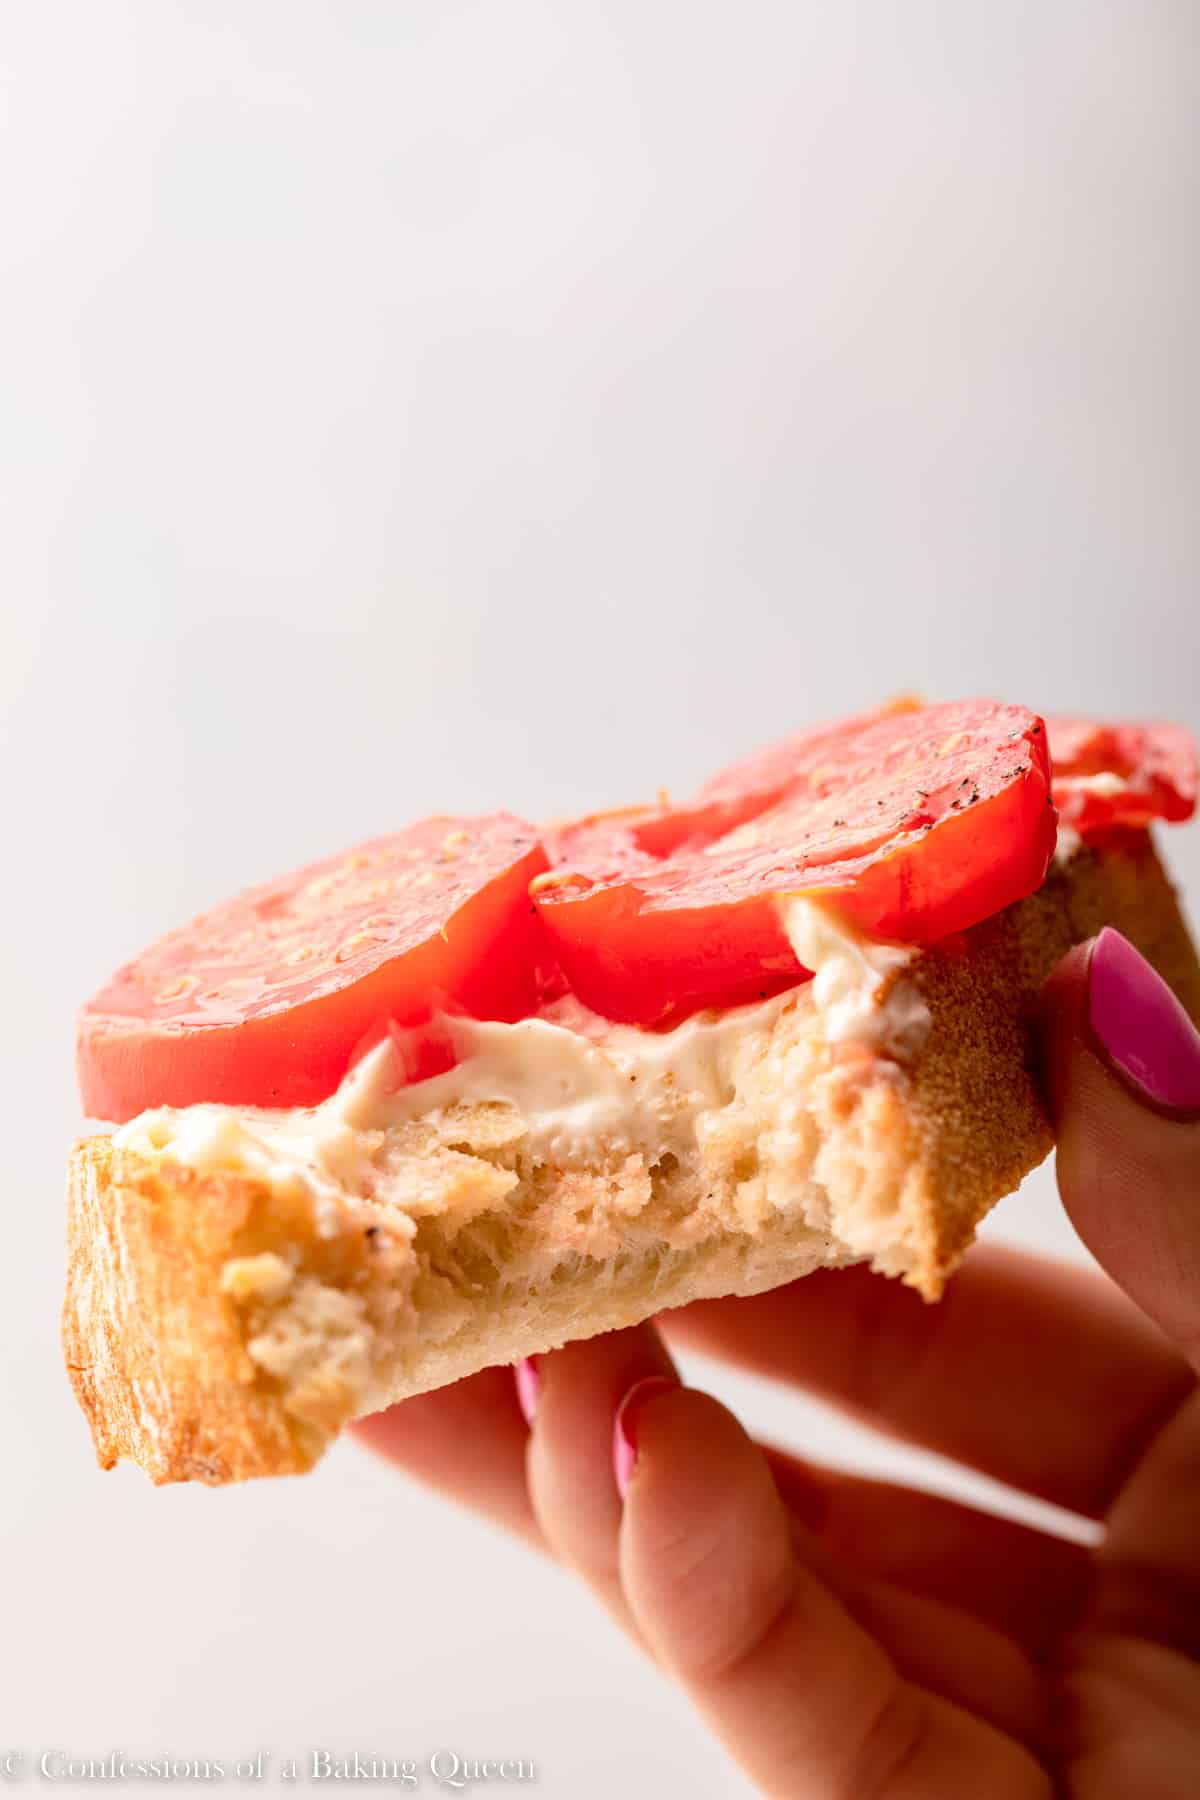 bite taken out of an open face tomato sandwich